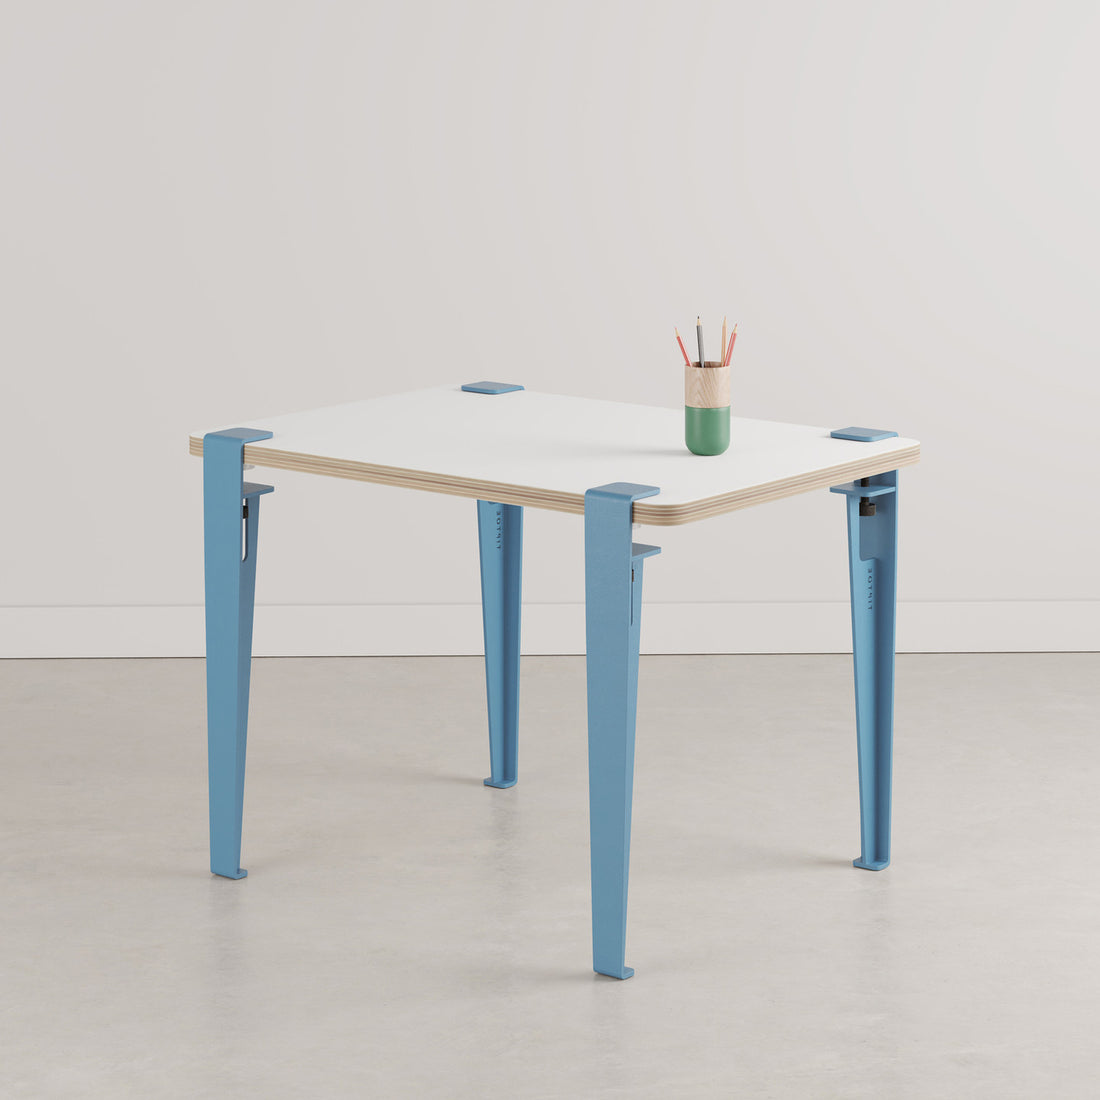 tiptoe-kids-desk-virce-versa-blackboar-&-white-tabletop-with-legs-whale-blue-70x50cm-tipt-stt07005023p02-tle050st1mz450- (3)